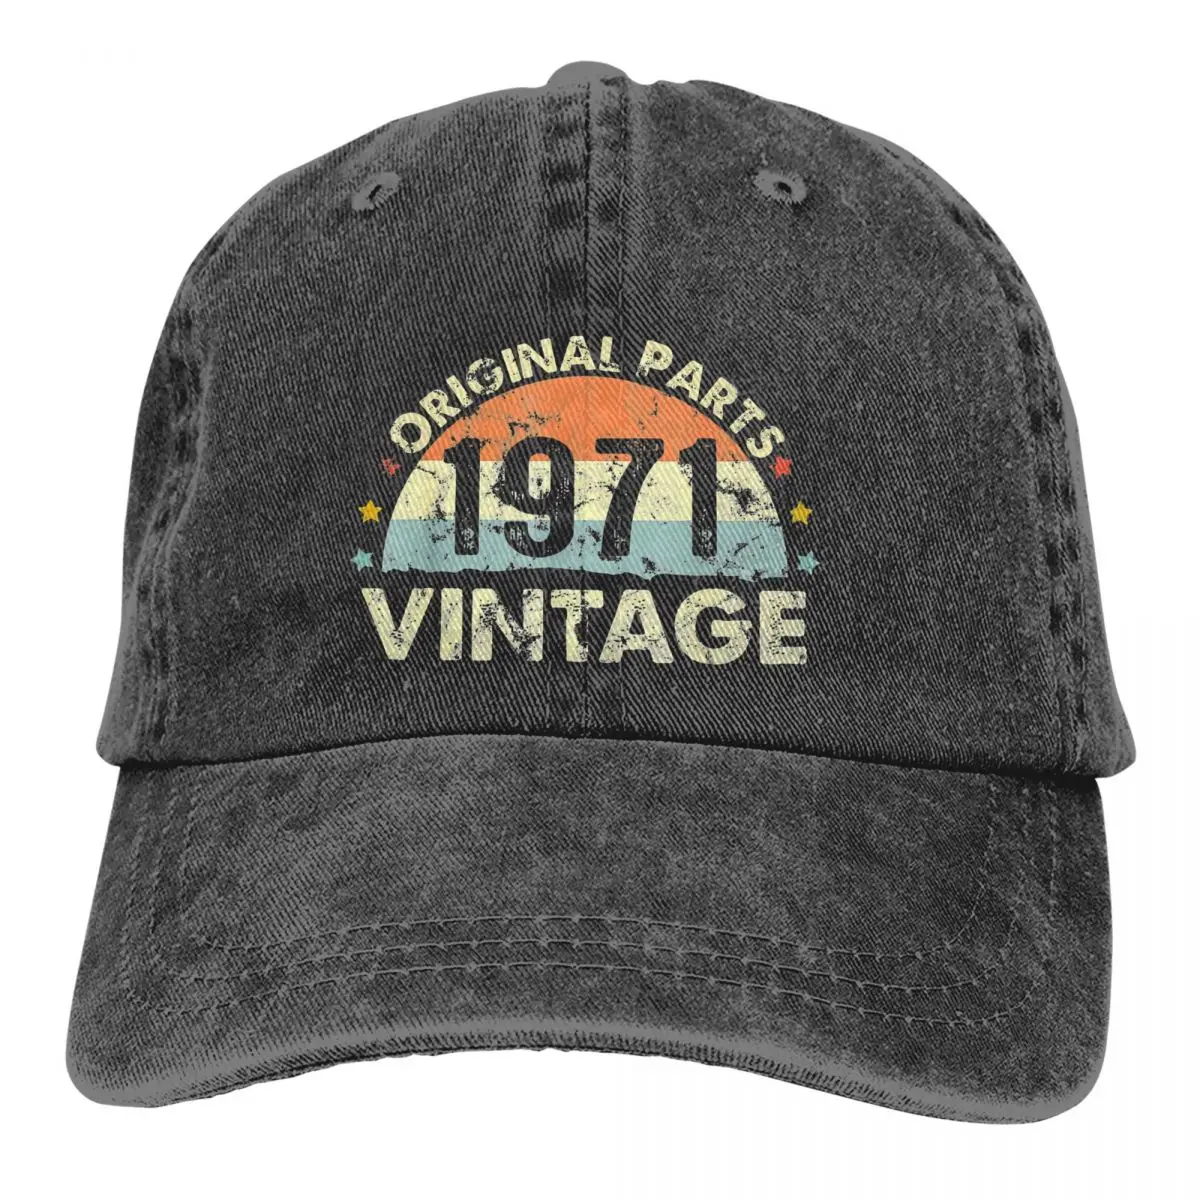 

Summer Cap Sun Visor Original Parts Hip Hop Caps Vintage 1971 Culture Cowboy Hat Peaked Hats